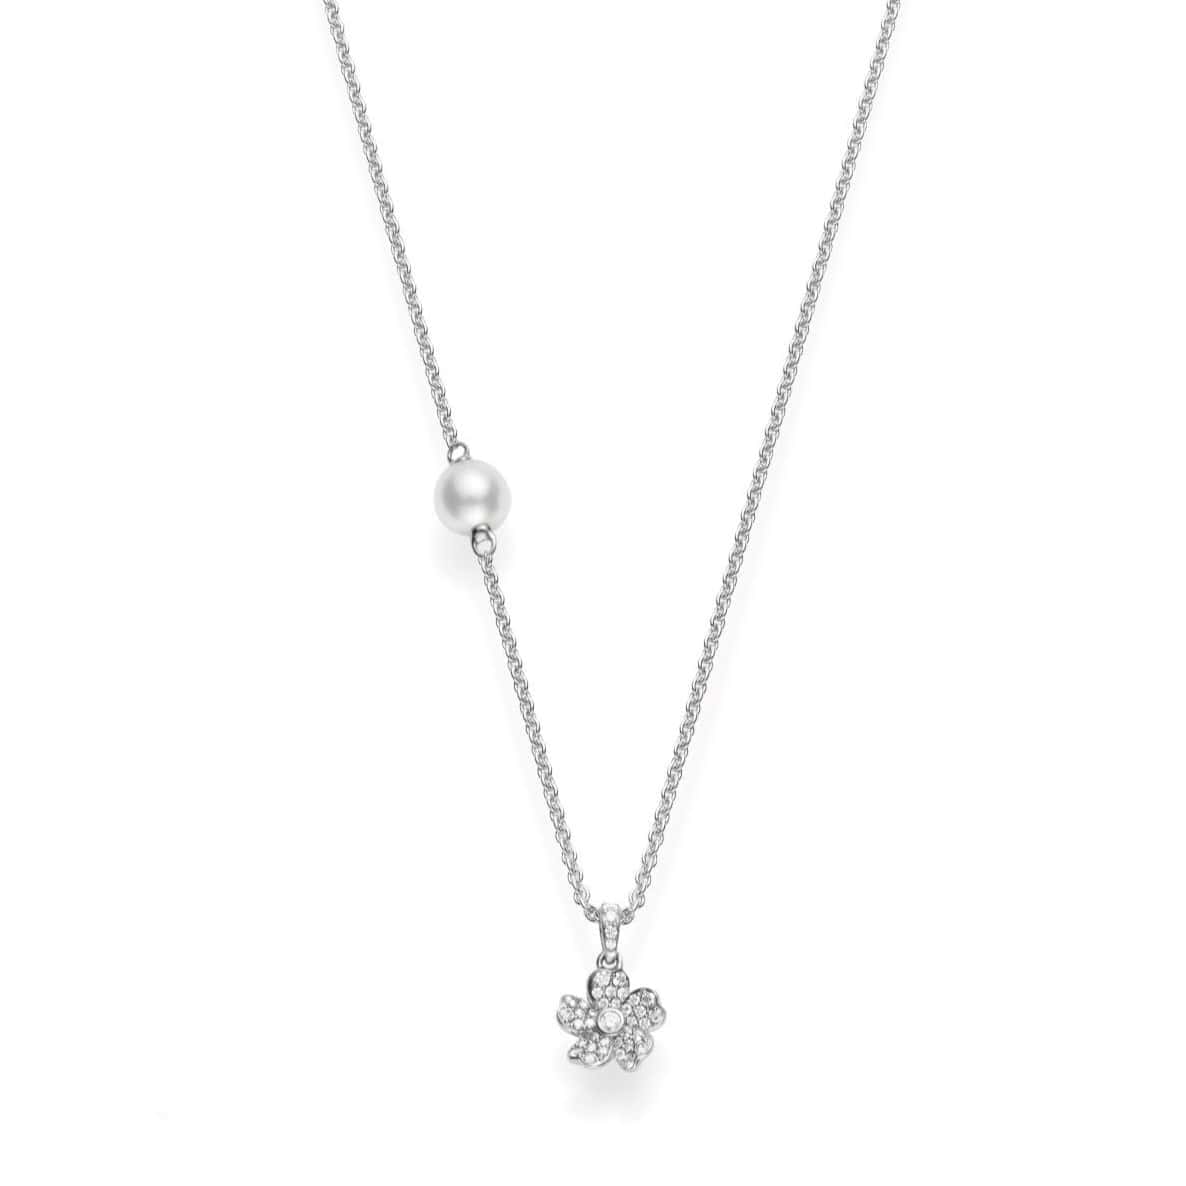 Mikimoto 18K White Gold Diamond and Pearl Pendant Necklace